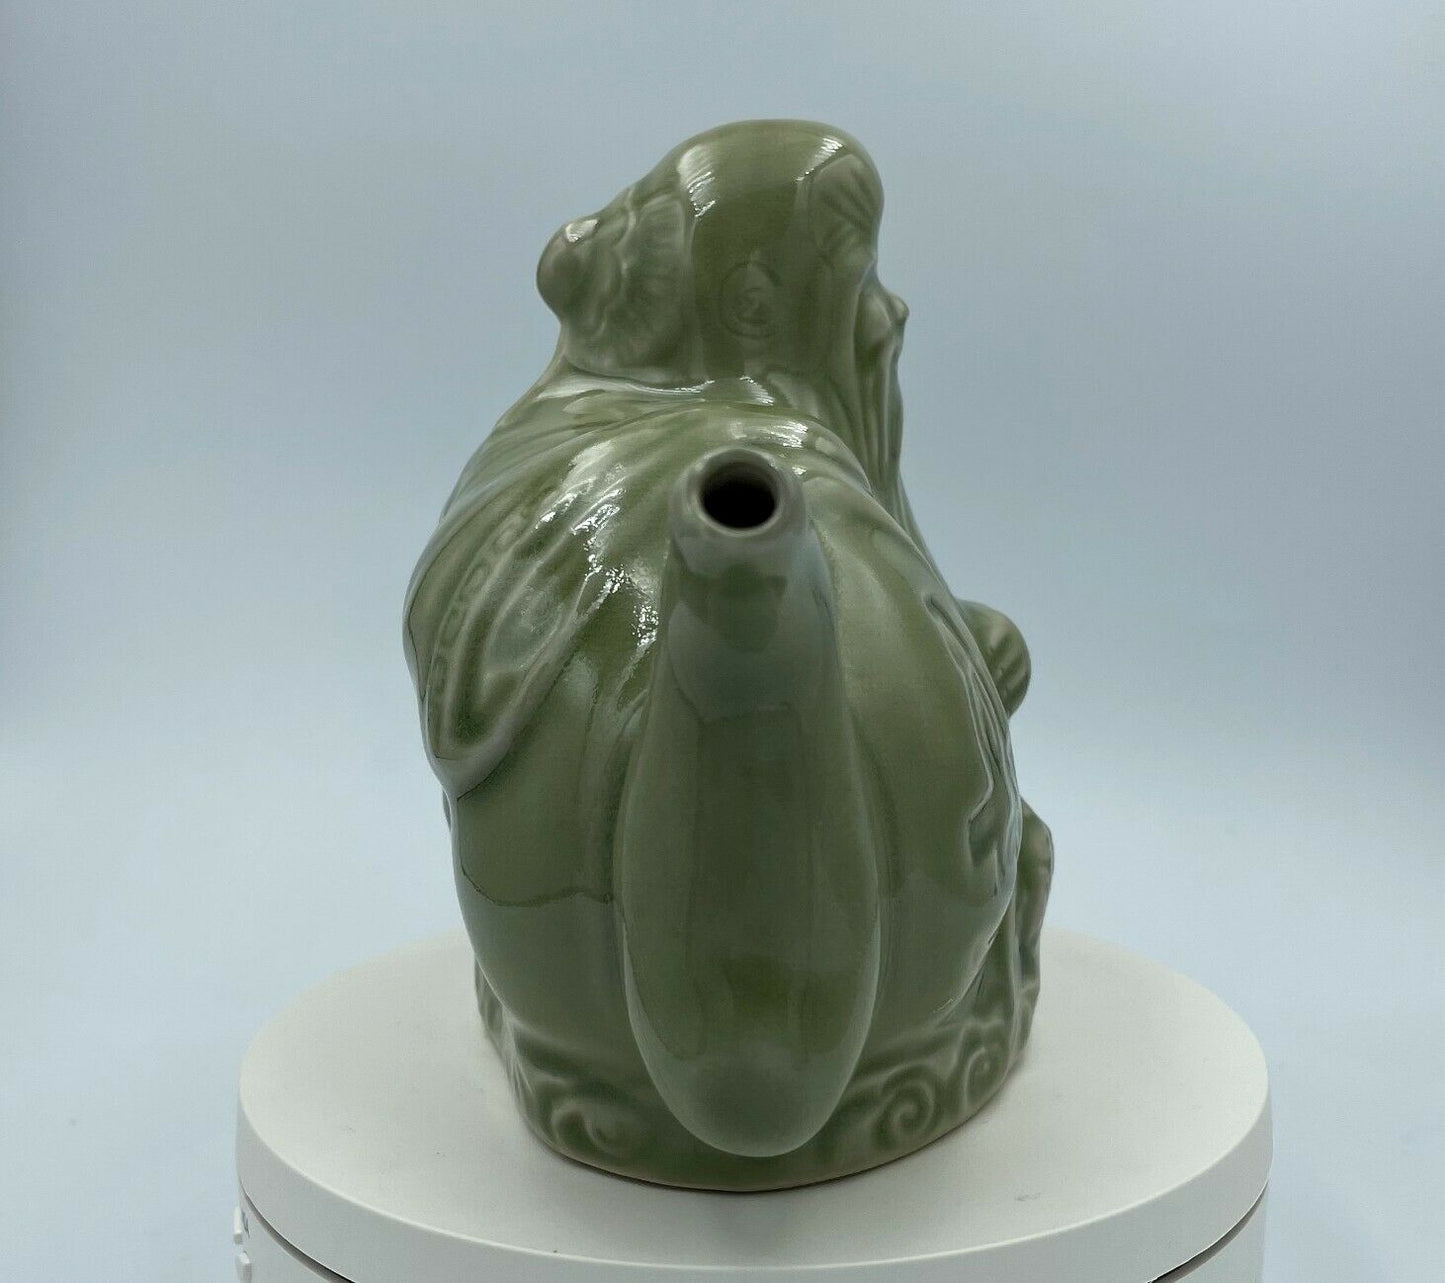 Acacuss Assassin 's Teapot Cadogan Chinese Trick Poison Tea Pot